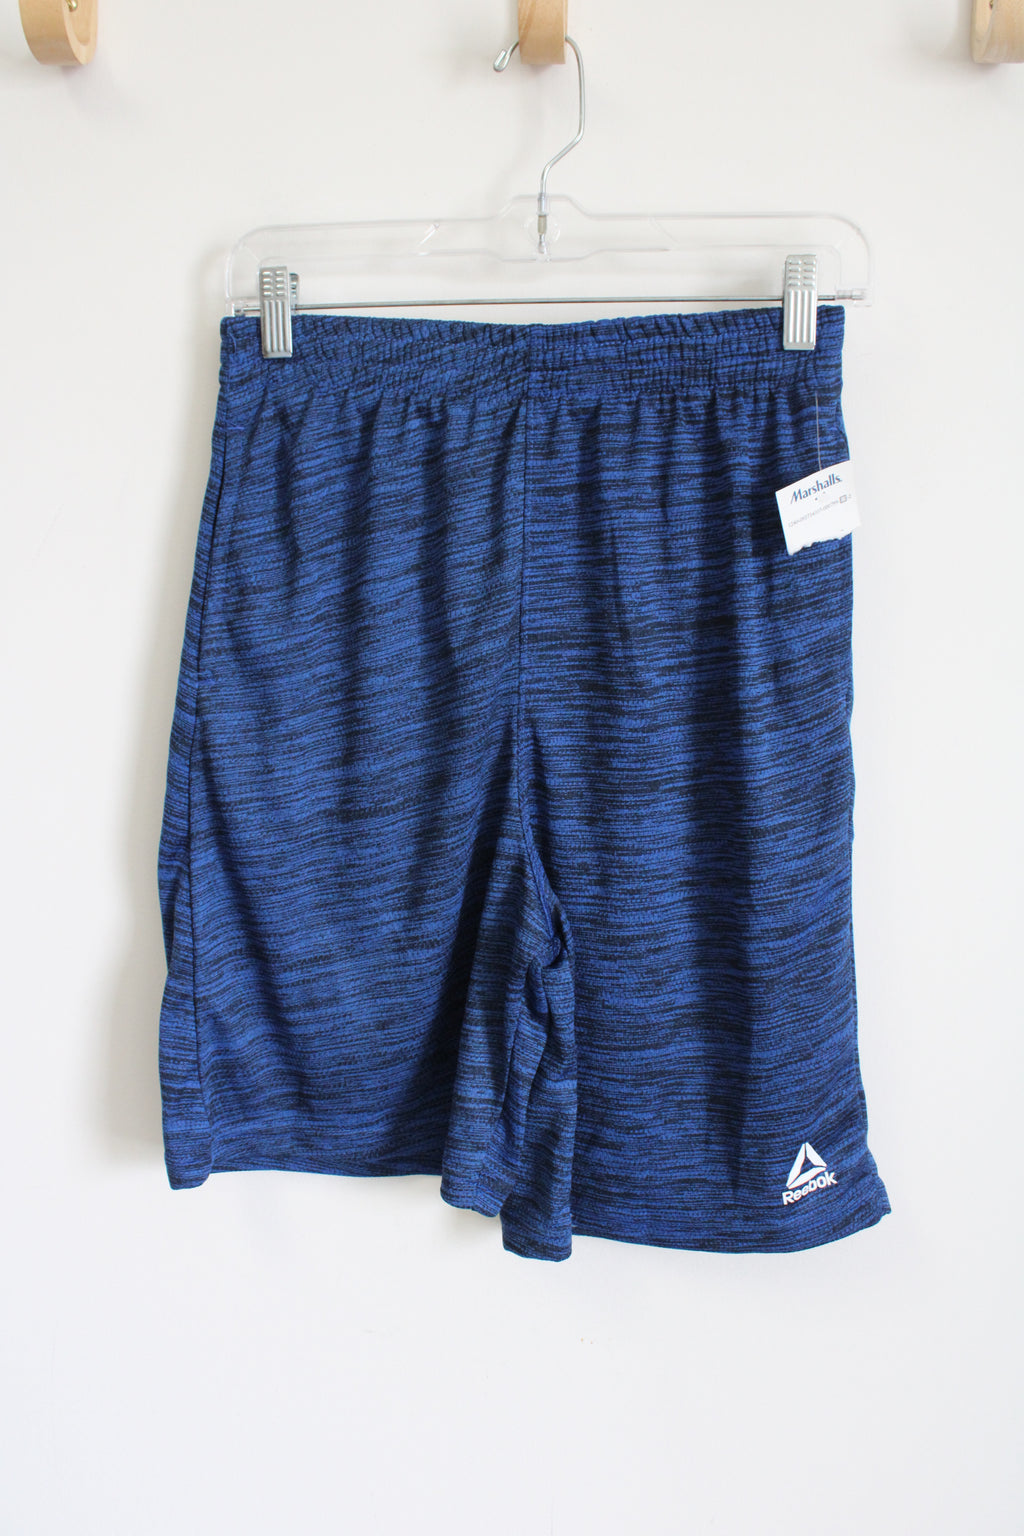 NEW Reebok Blue Shorts | Youth XL (18/20)